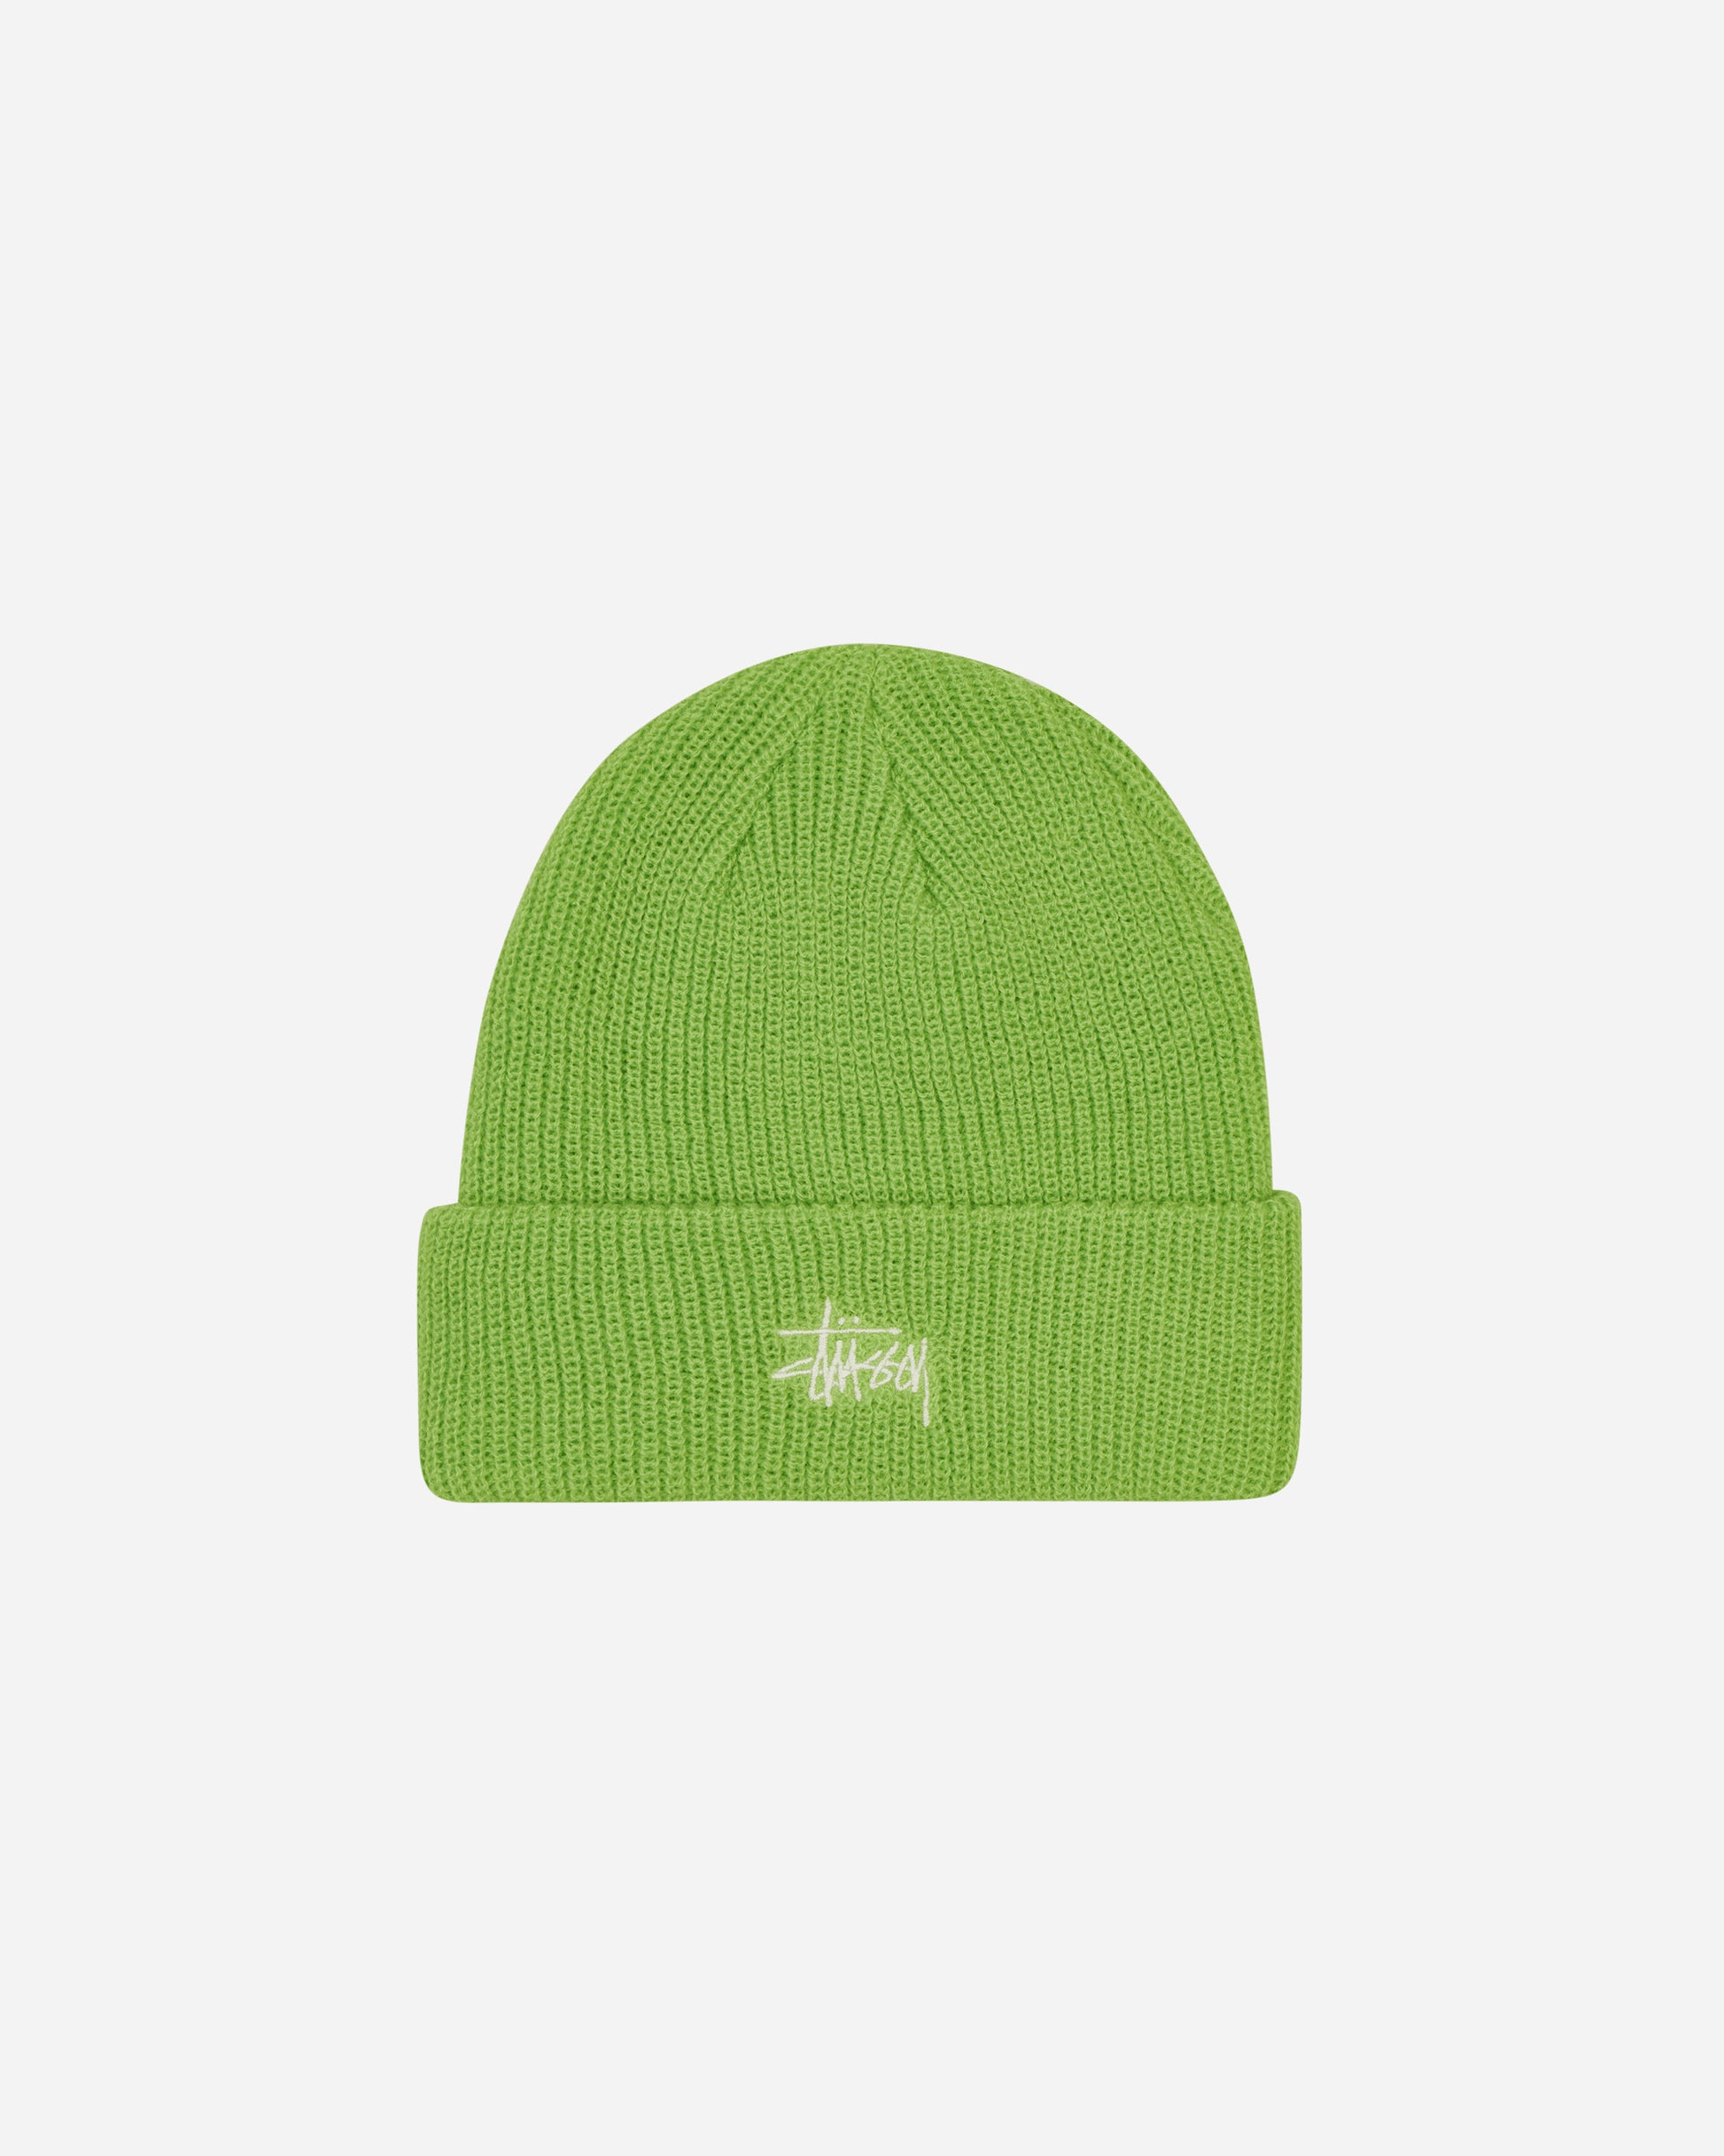 Stüssy Basic Cuff Beanie Bright Green Hats Beanies 1321019 BGRE